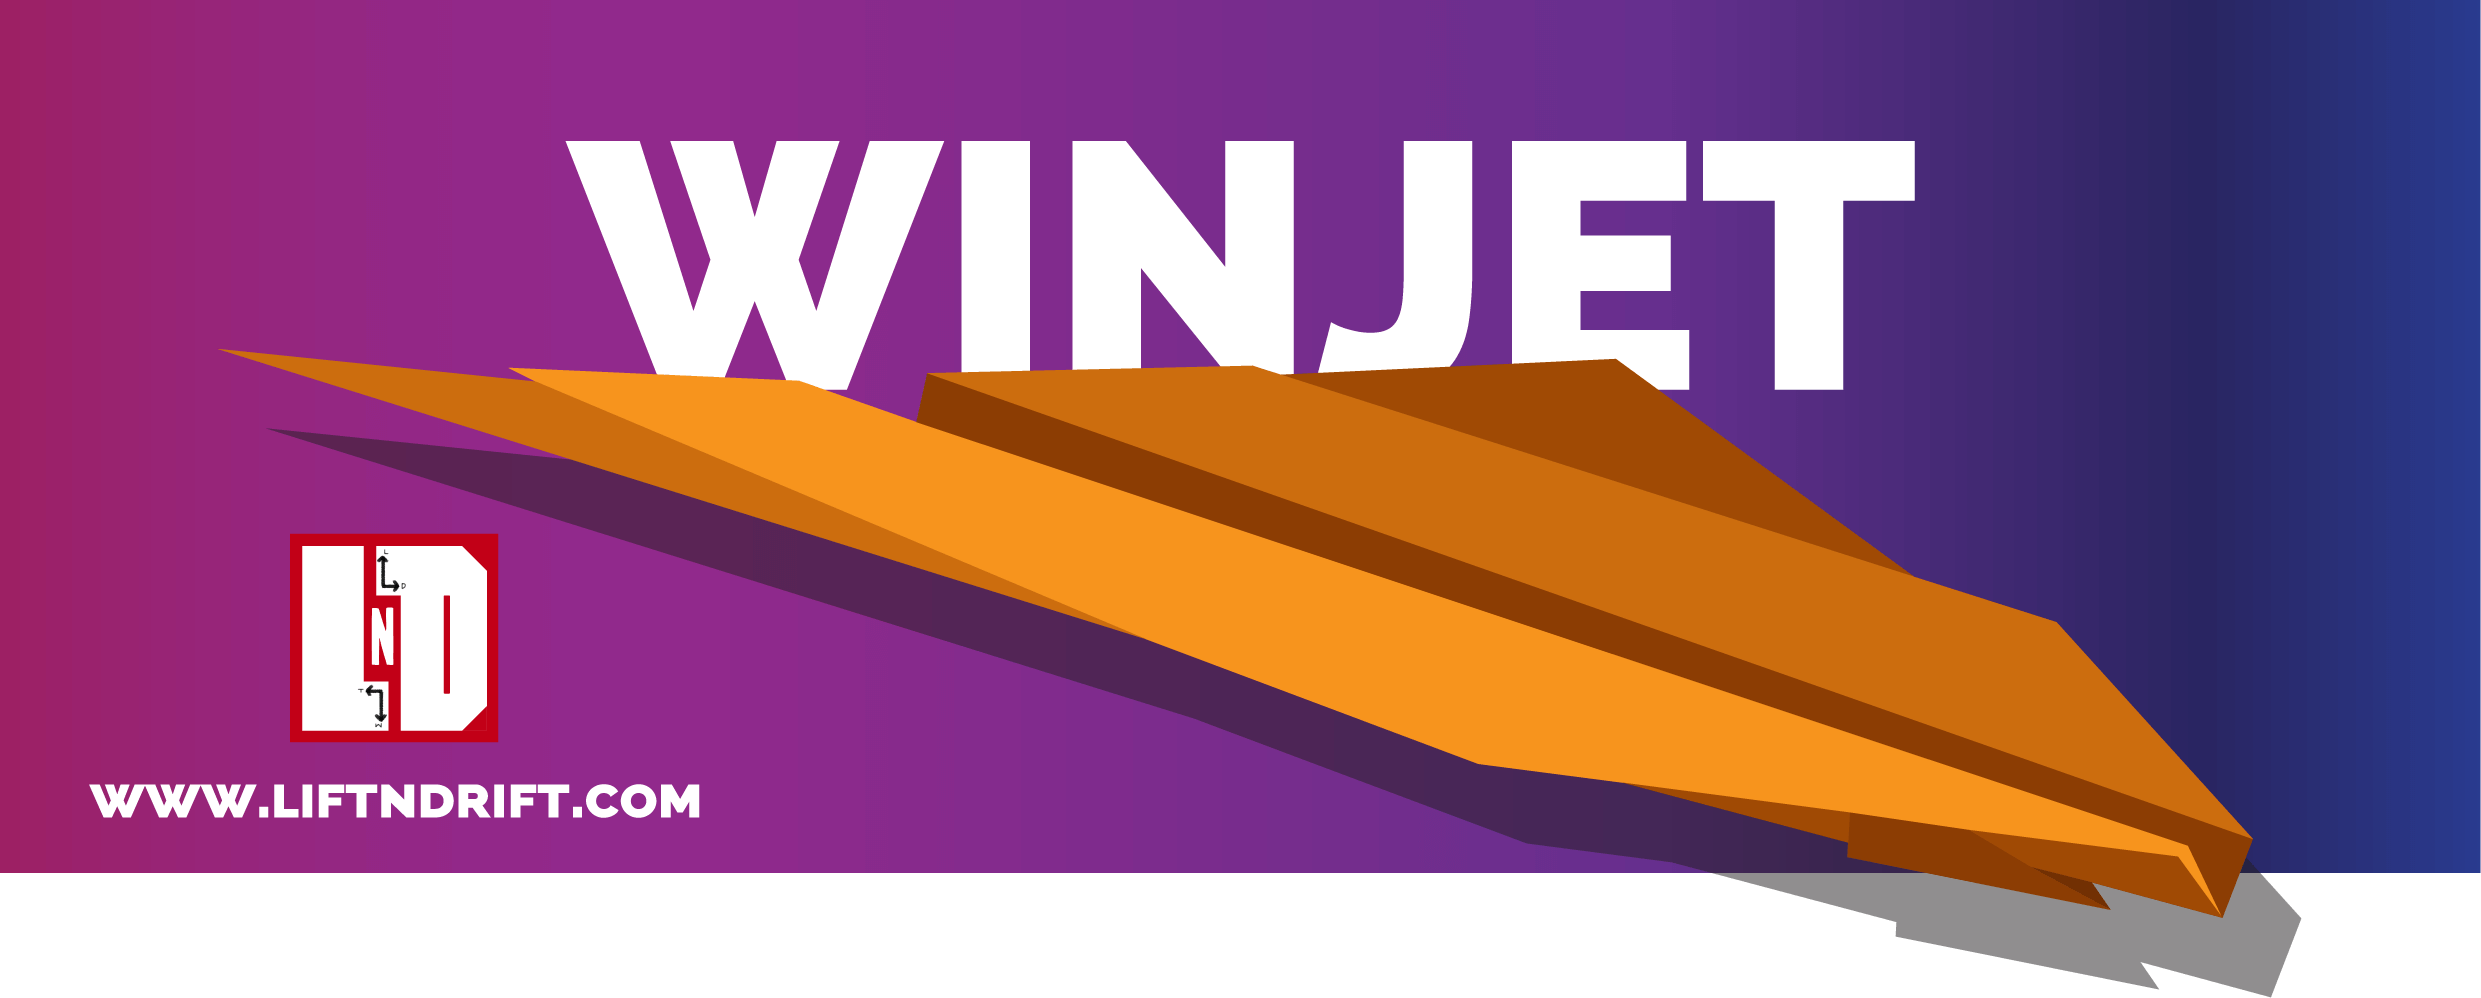 Winjet Paper airplane